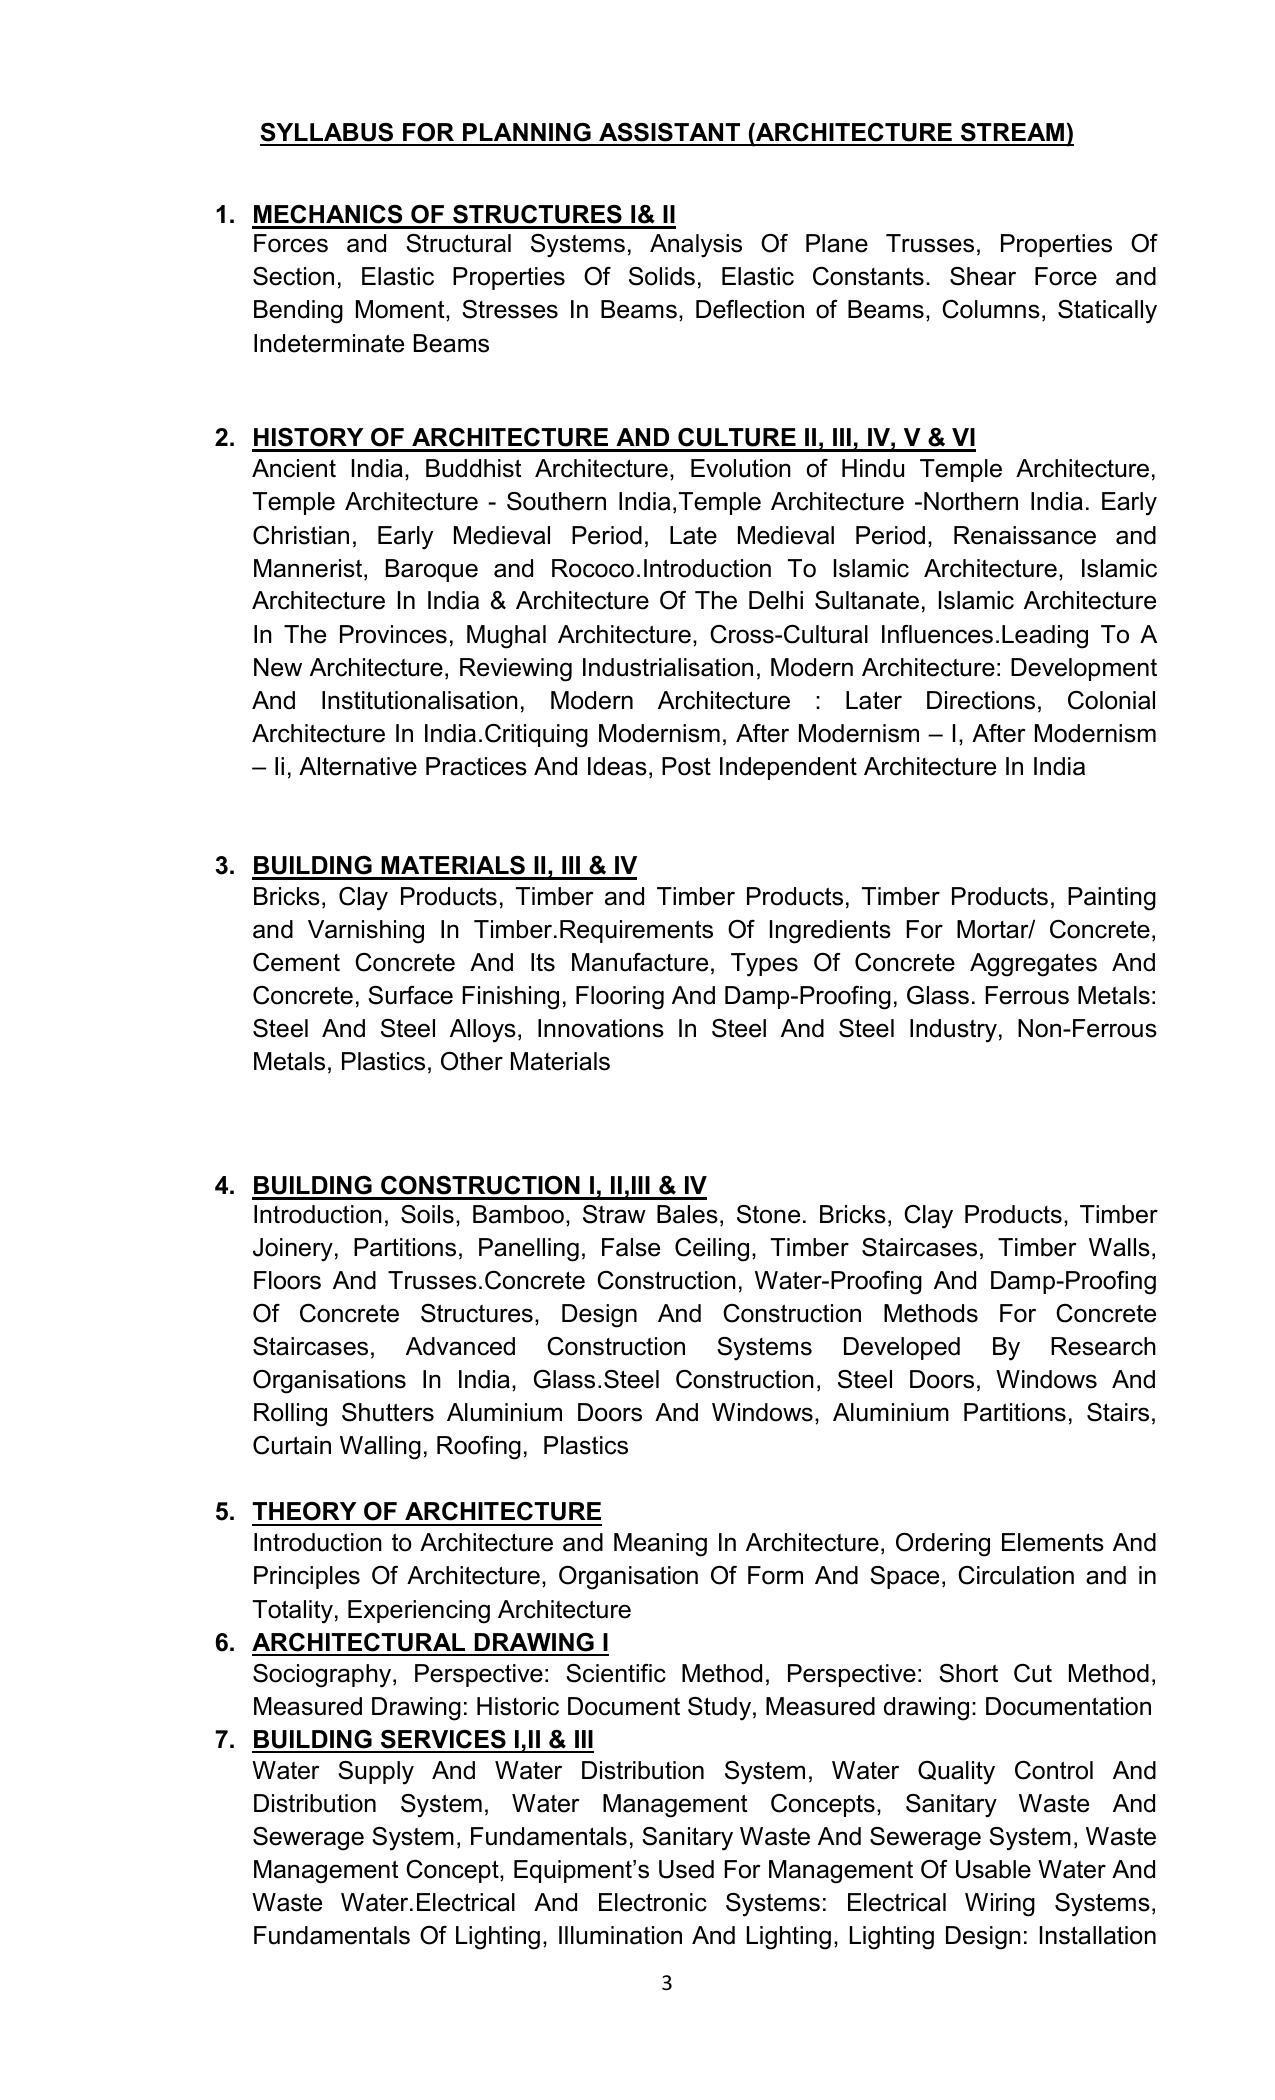 Andaman & Nicobar Administration Recruitment 2022 for 127 Various Vacancies - Page 22